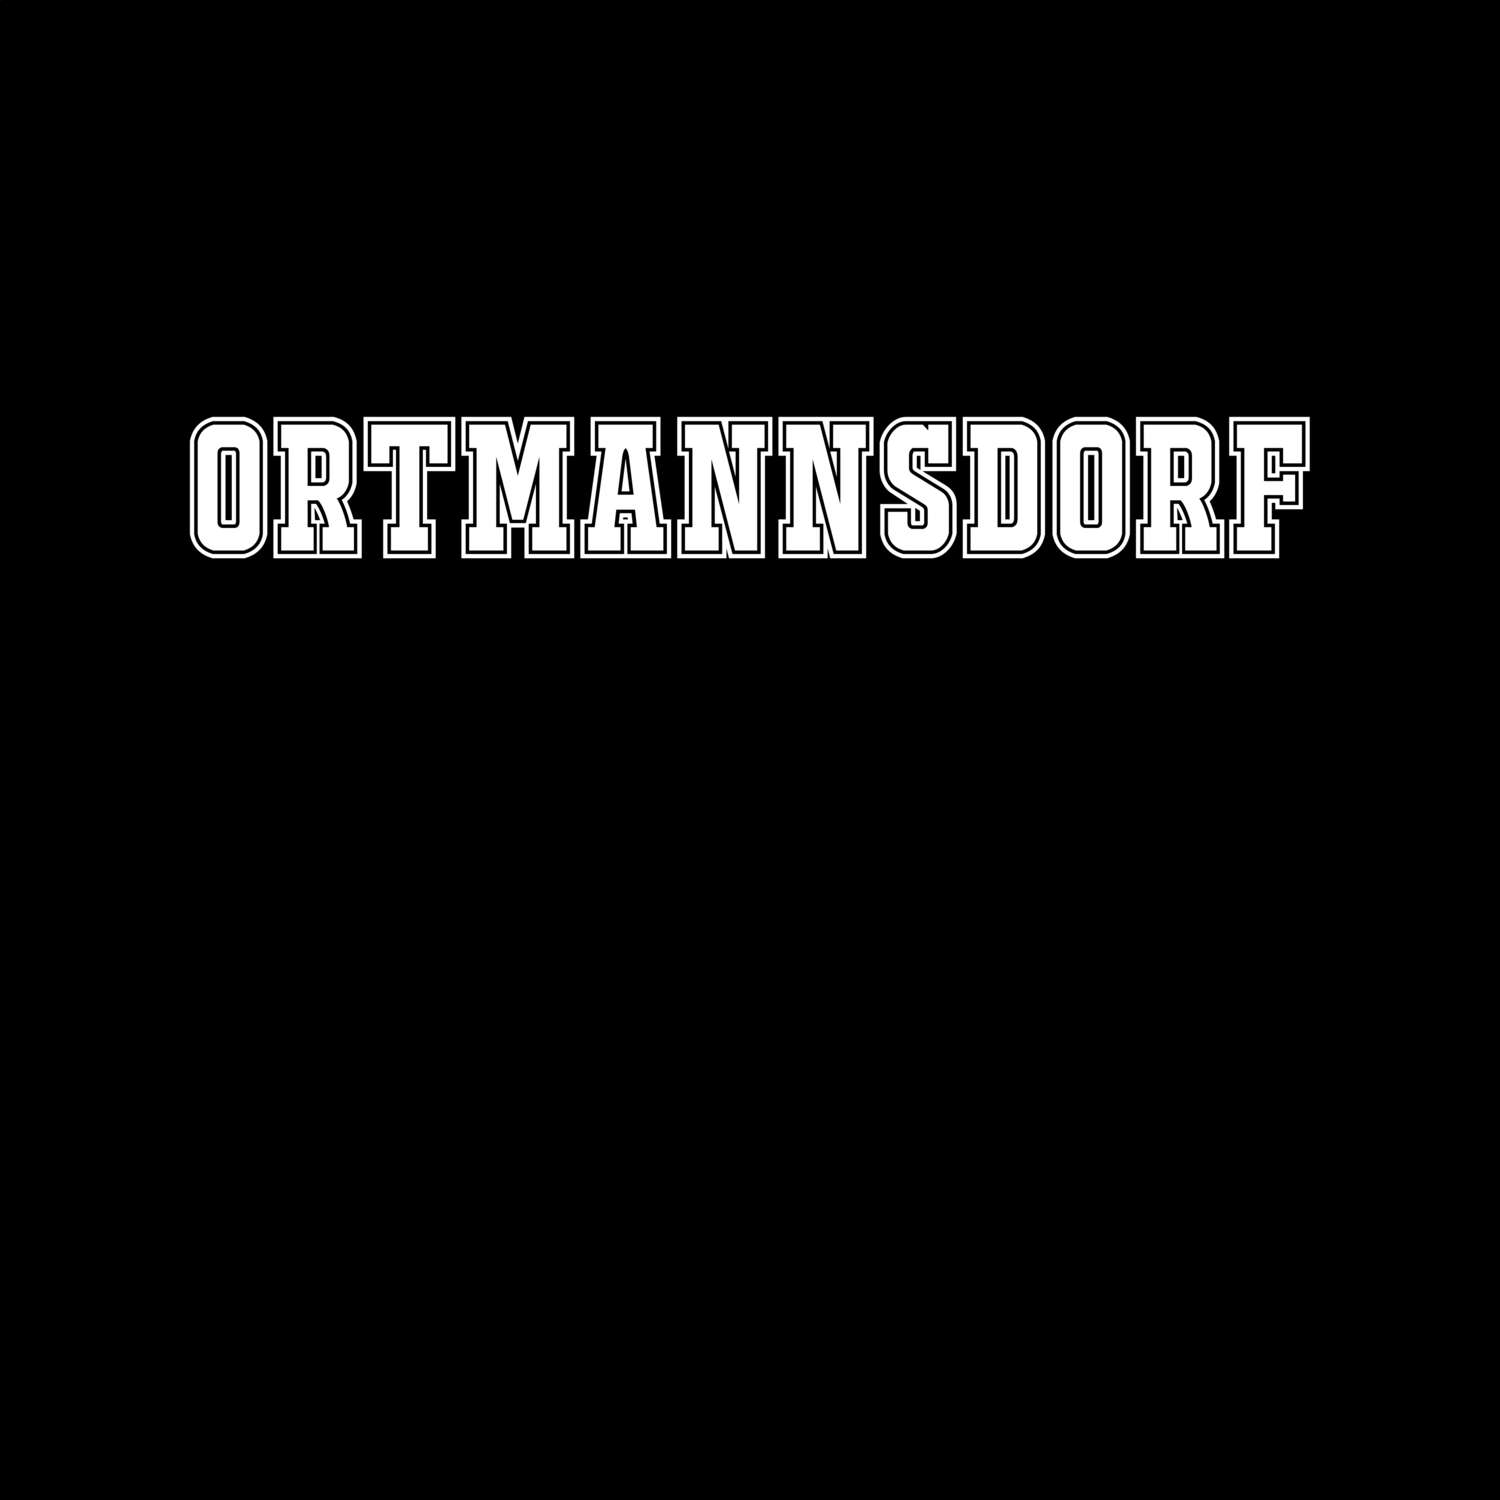 Ortmannsdorf T-Shirt »Classic«